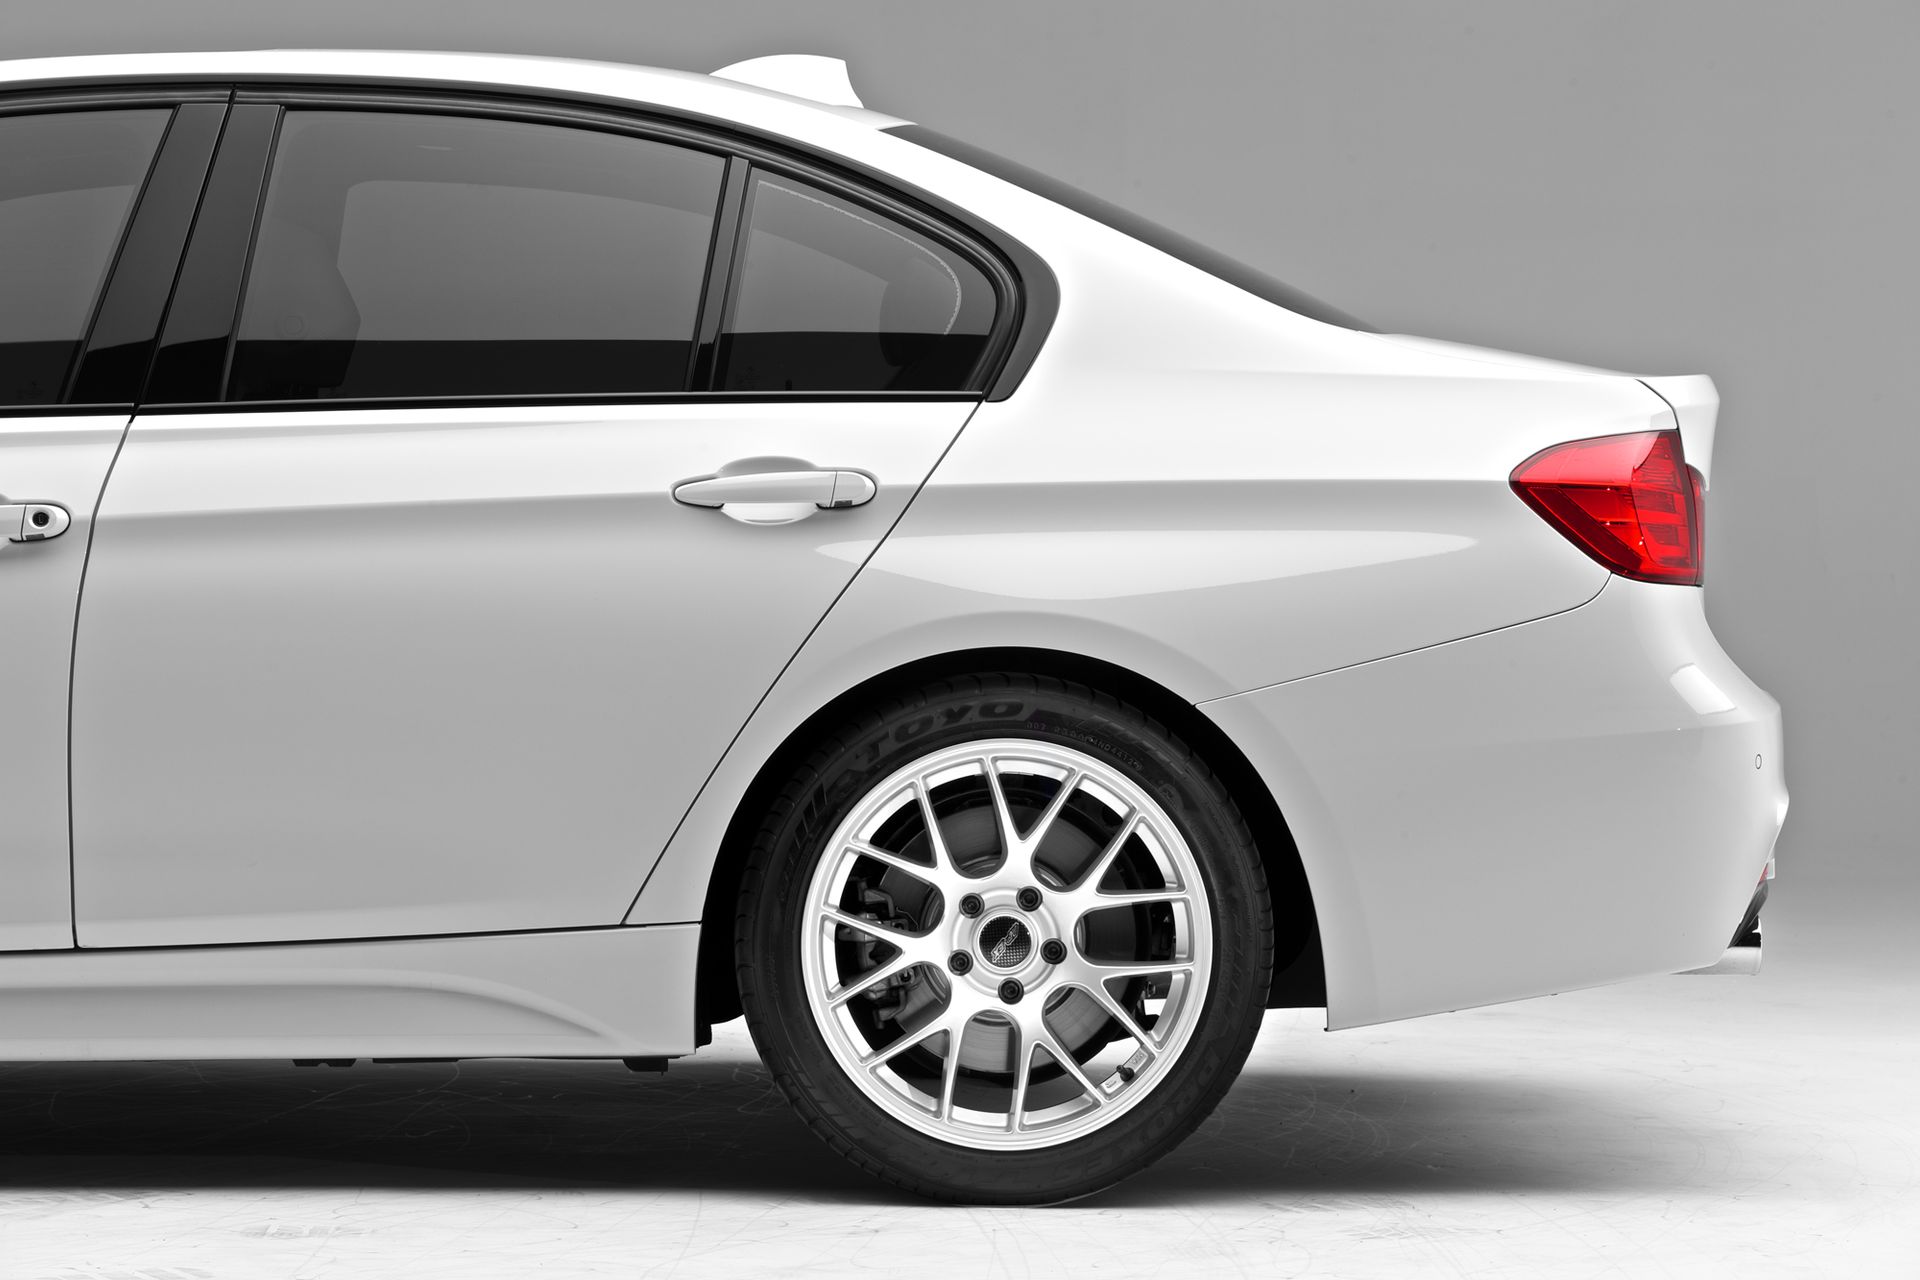 BMW F30 Sedan 3 Series with 18" EC-7 in Race Silver